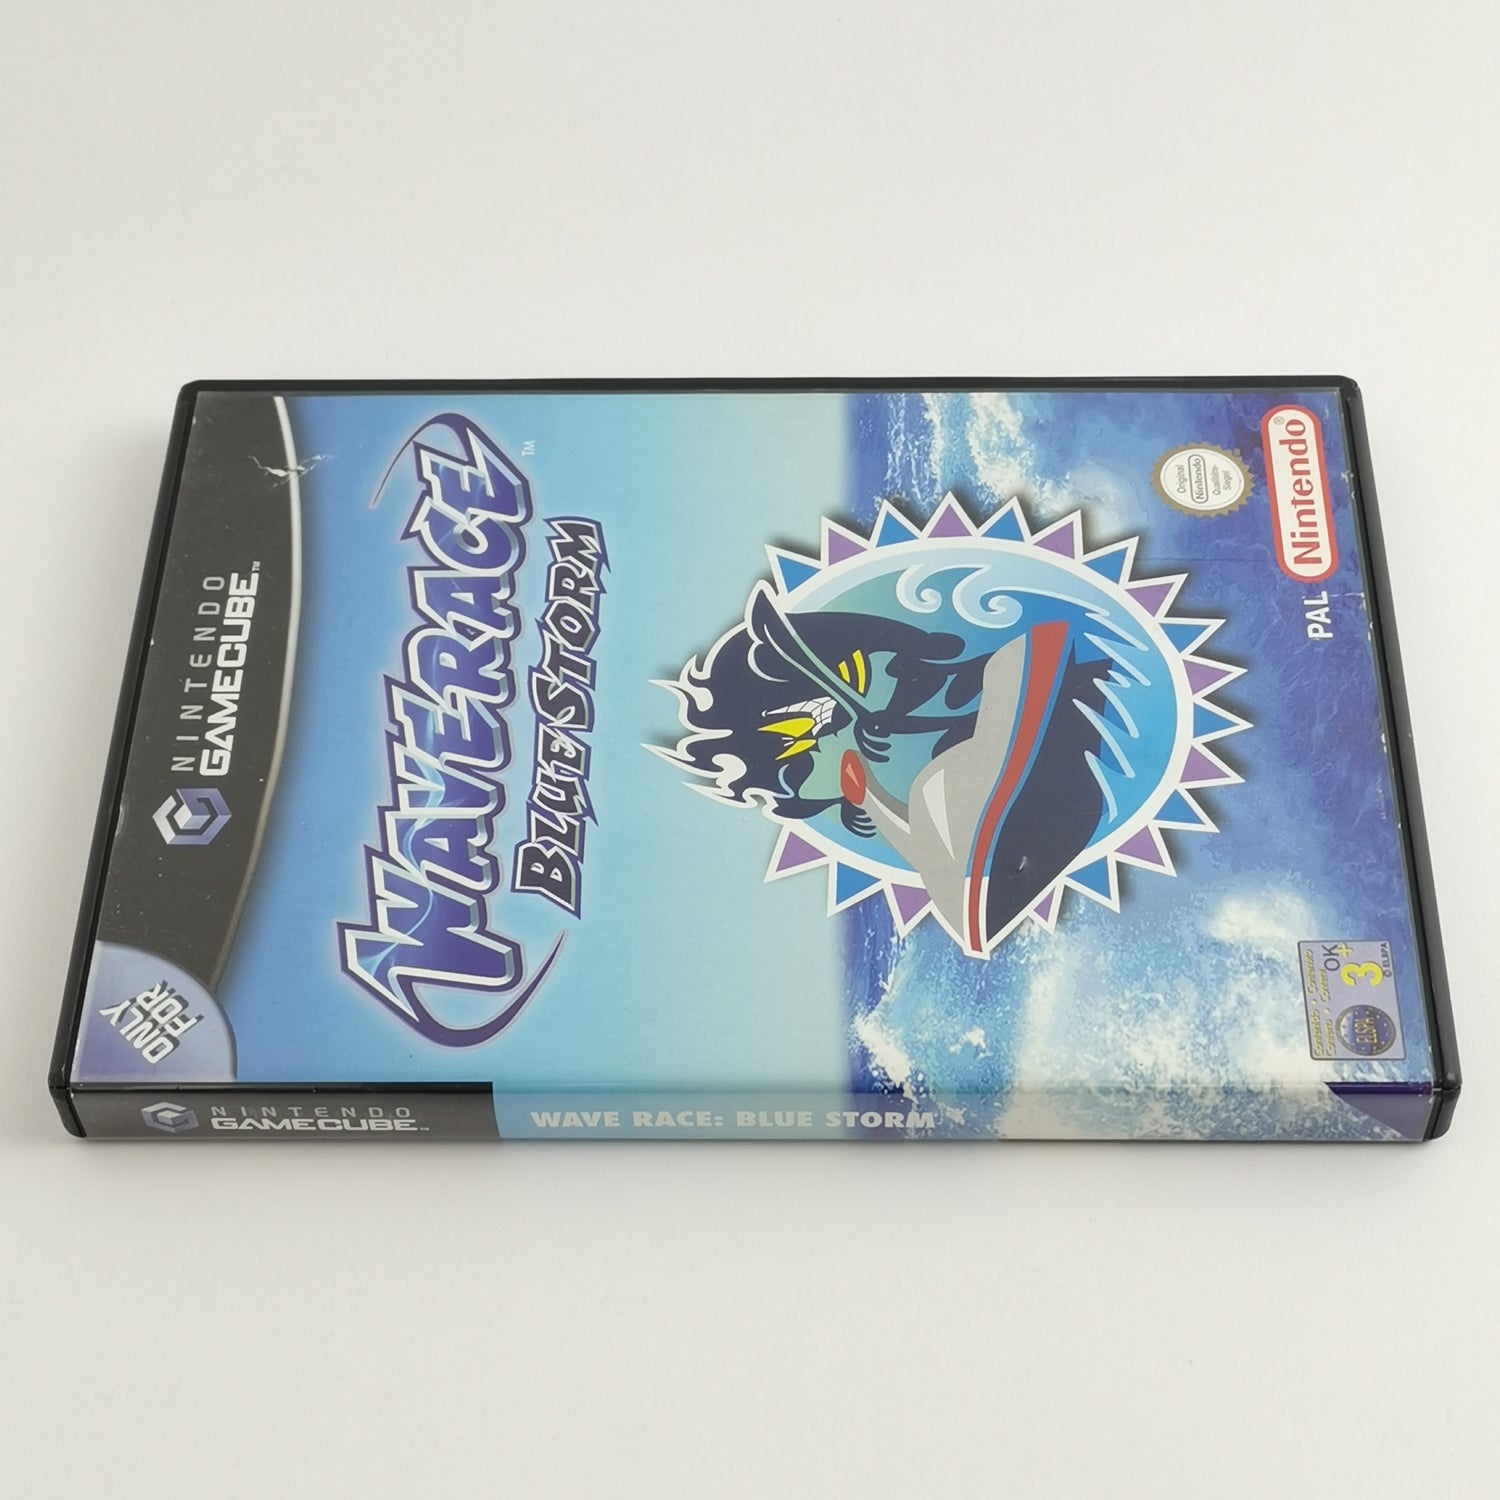 Nintendo Gamecube Game: Waverace Bluestorm - OVP & Instructions PAL | GC